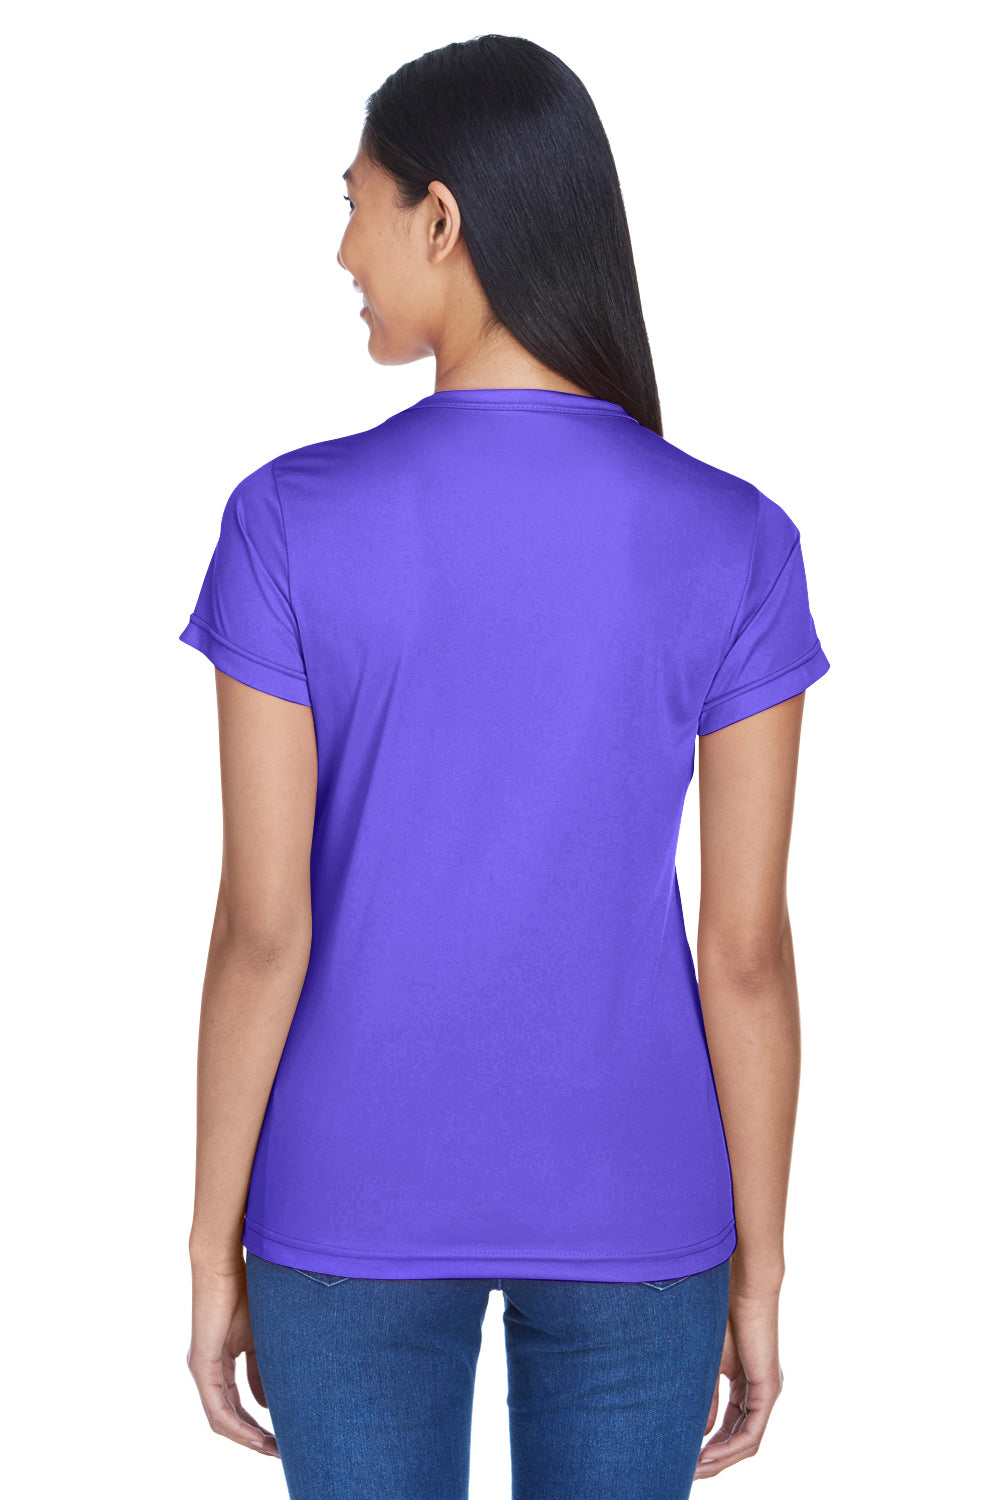 UltraClub 8420L Womens Cool & Dry Performance Moisture Wicking Short Sleeve Crewneck T-Shirt Purple Back